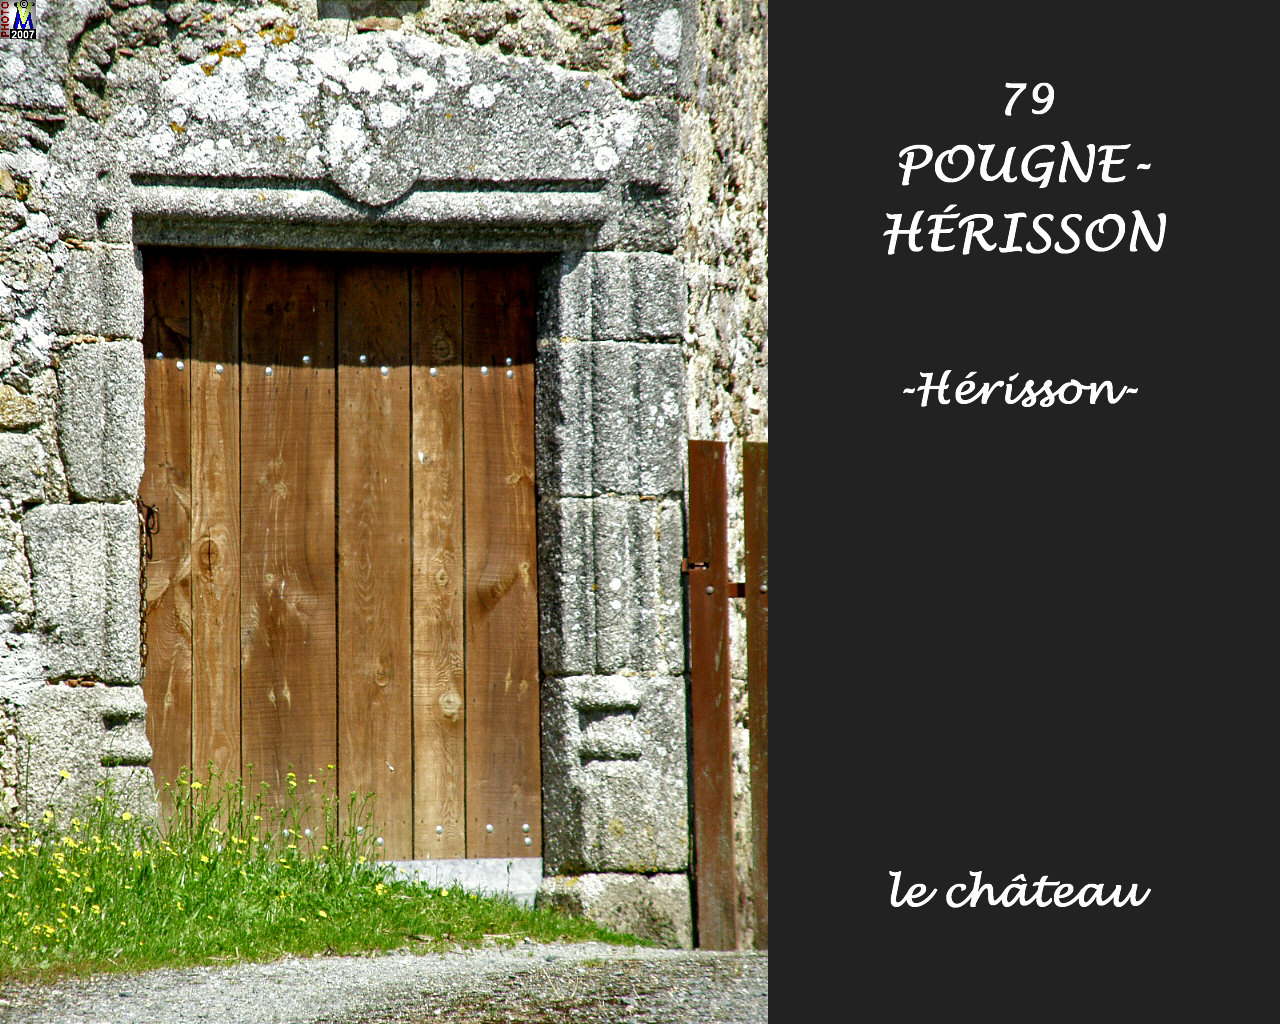 79POUGNE-HERISSON_herisson_chateau_112.jpg